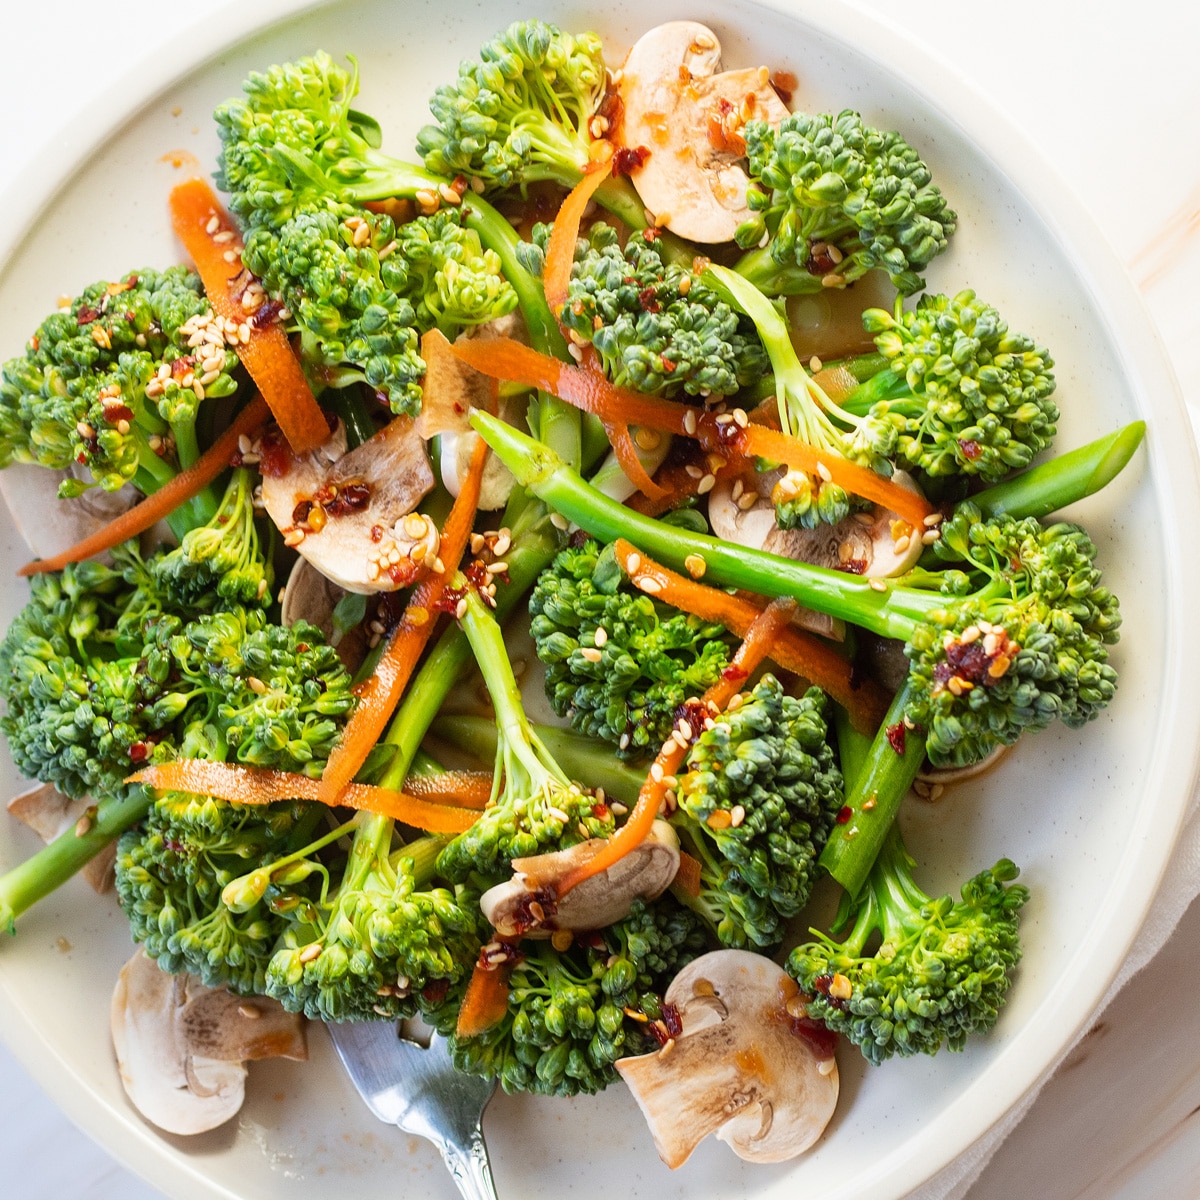 Salad Broccolini di piring putih dengan cendawan, wortel yang dicukur, dan berpakaian Asia ringan.